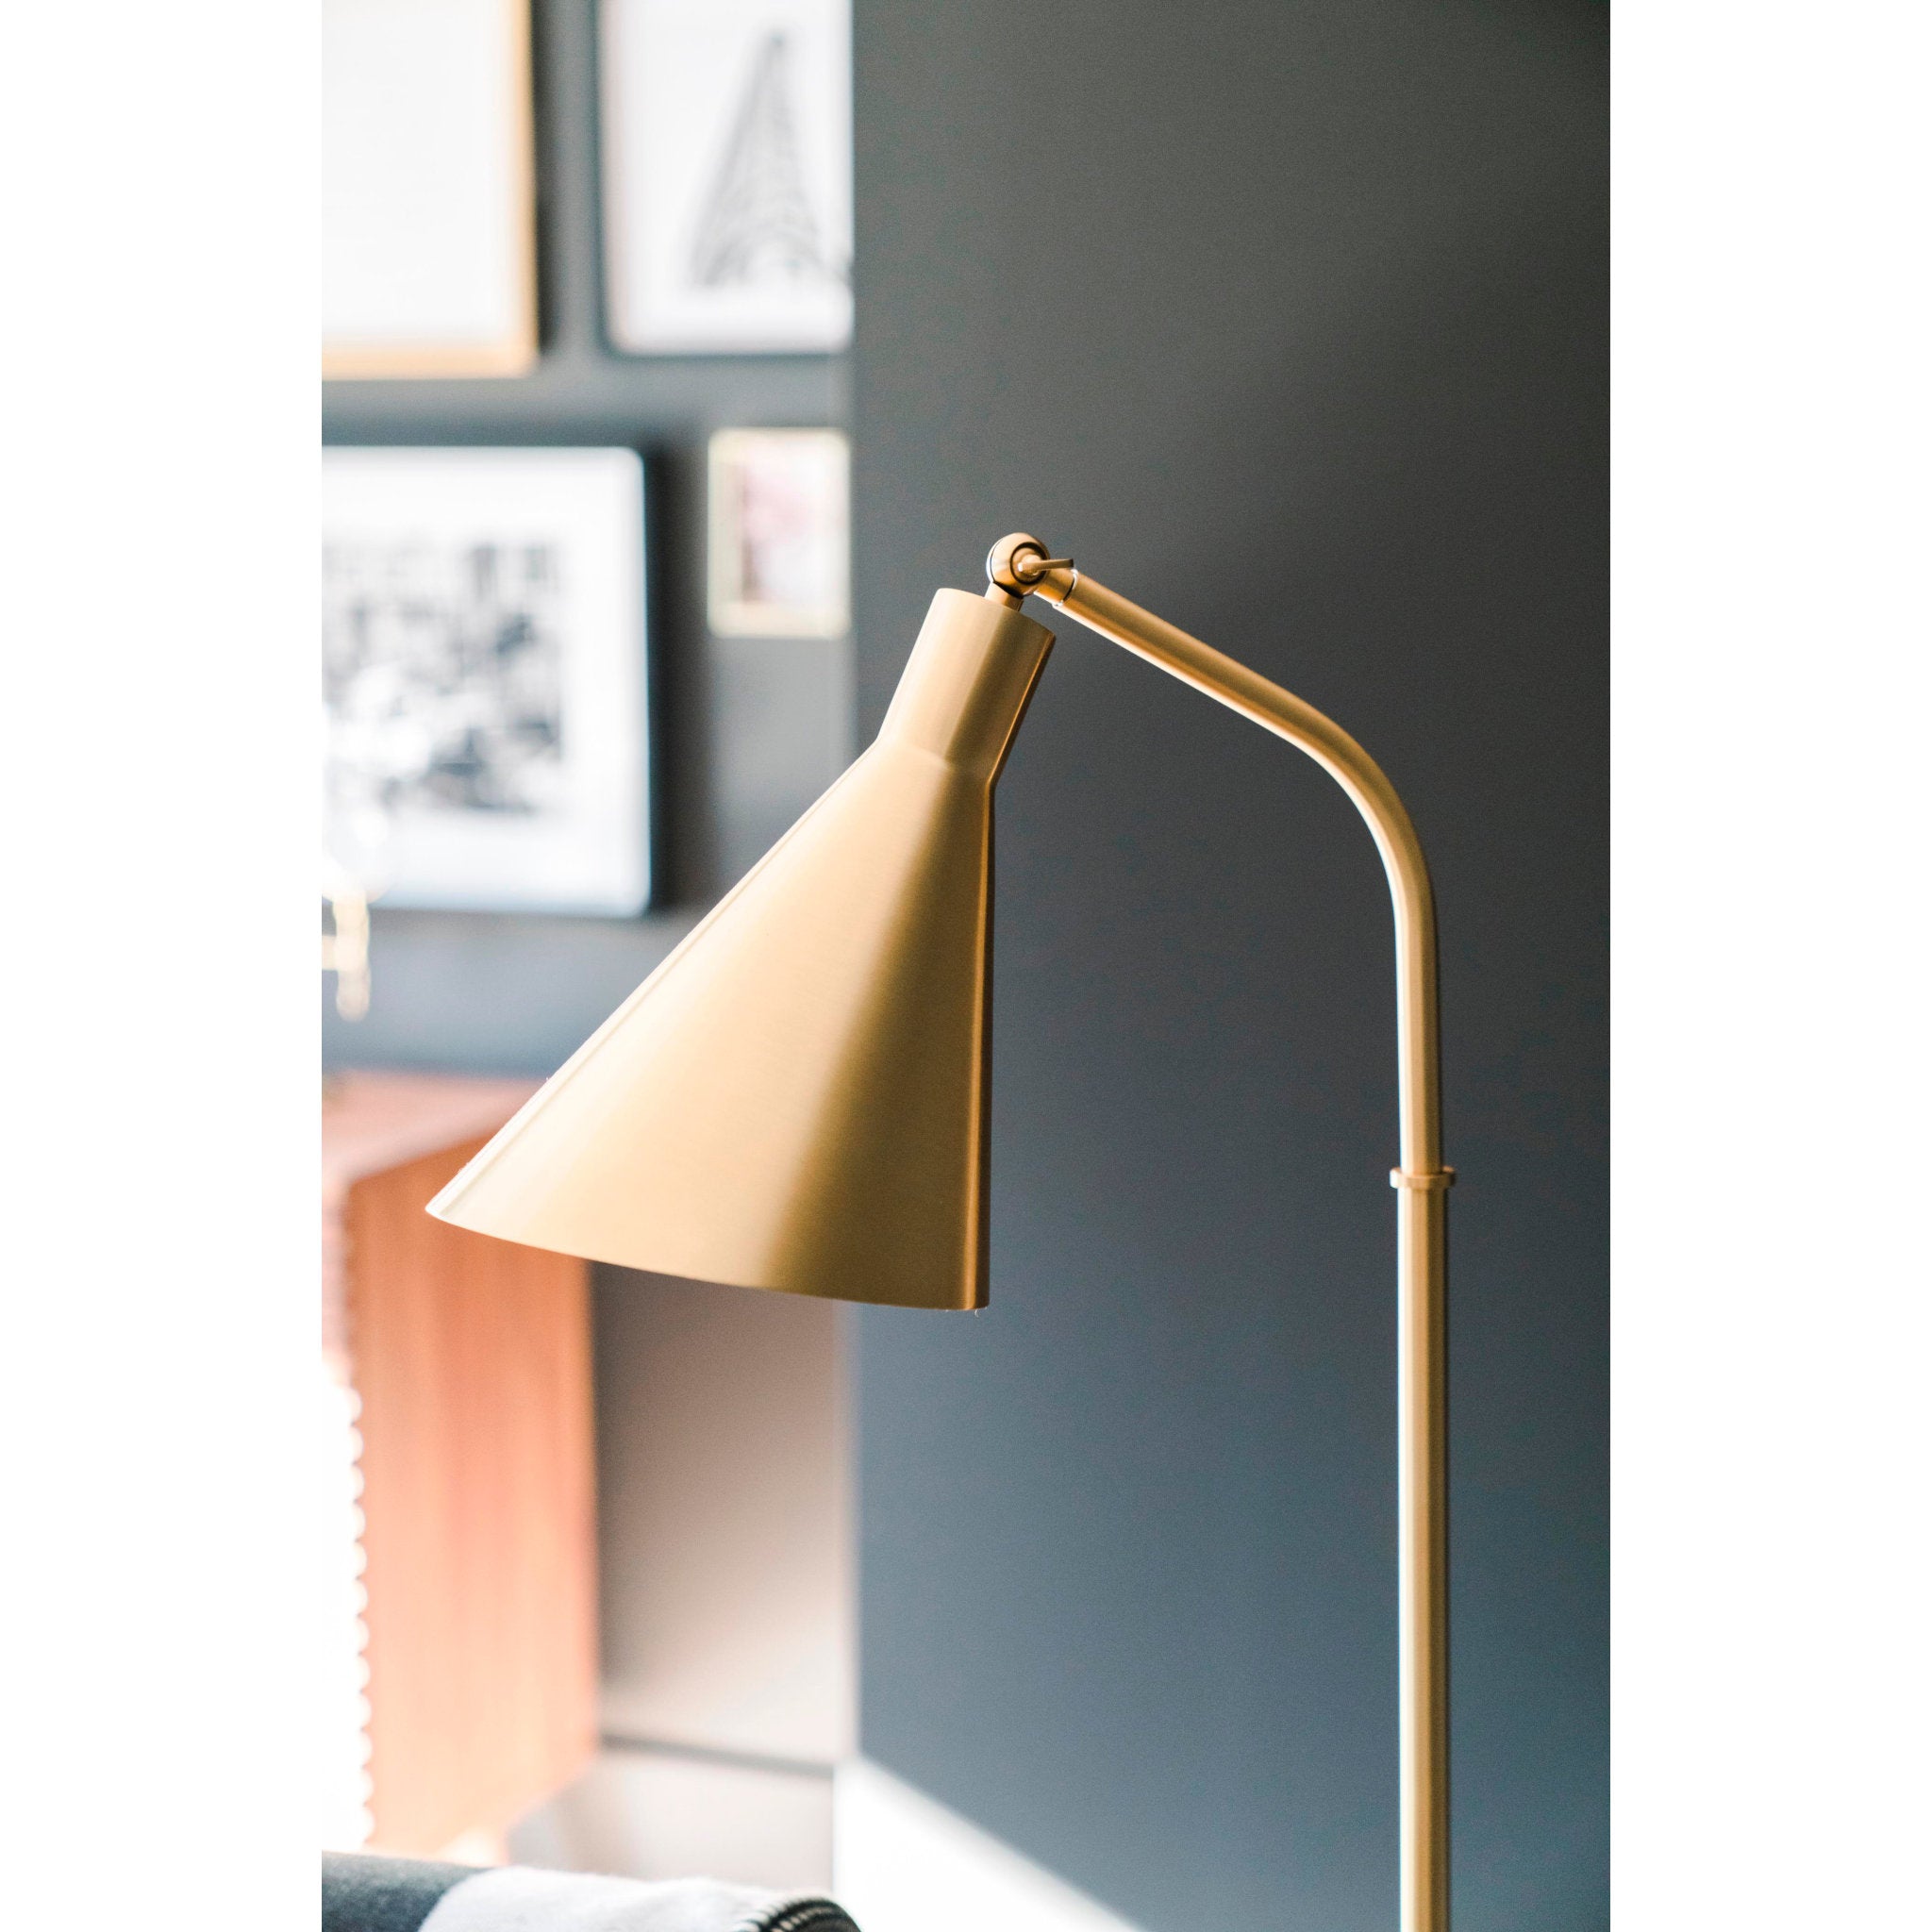 Stanton 1 Light Floor Lamp in Aged Brass